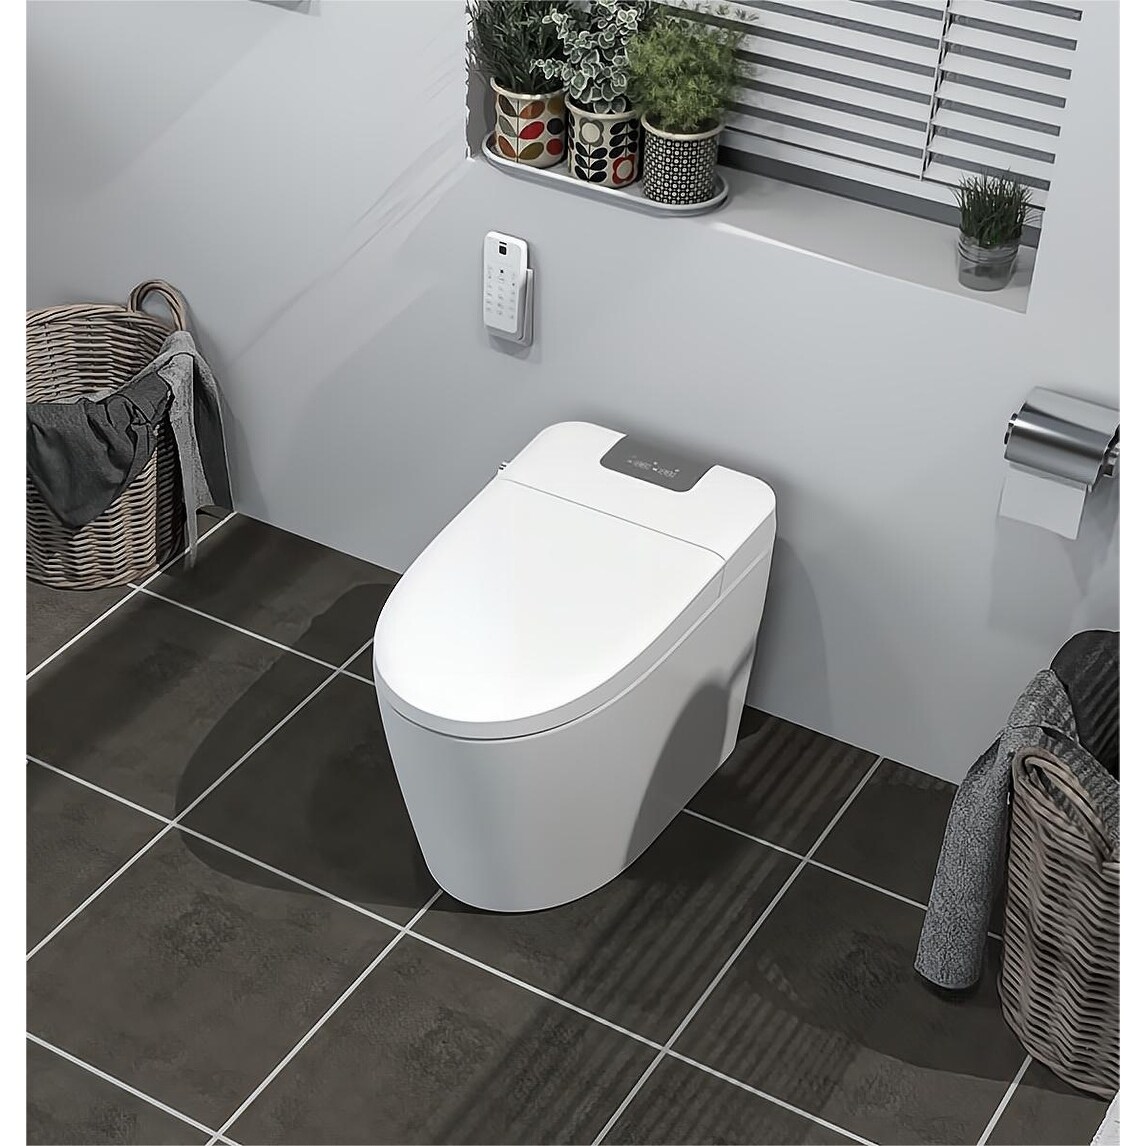 https://ak1.ostkcdn.com/images/products/is/images/direct/d345f89ba0168e30f828c599350158b27808f312/Smart-Toilet-and-Bidet-Toilets.jpg